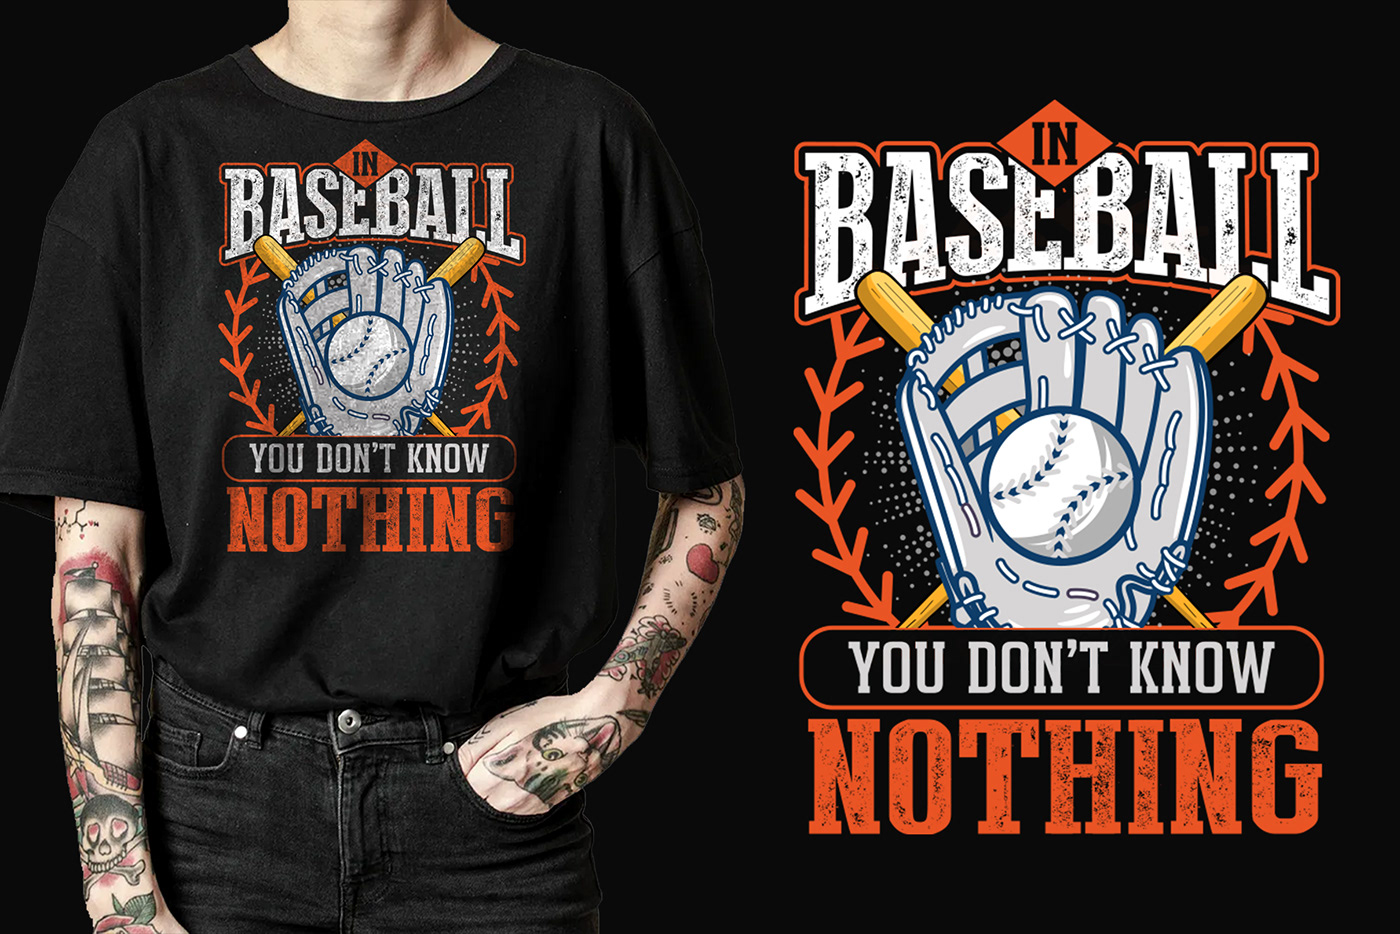 USA Baseball t shirt design